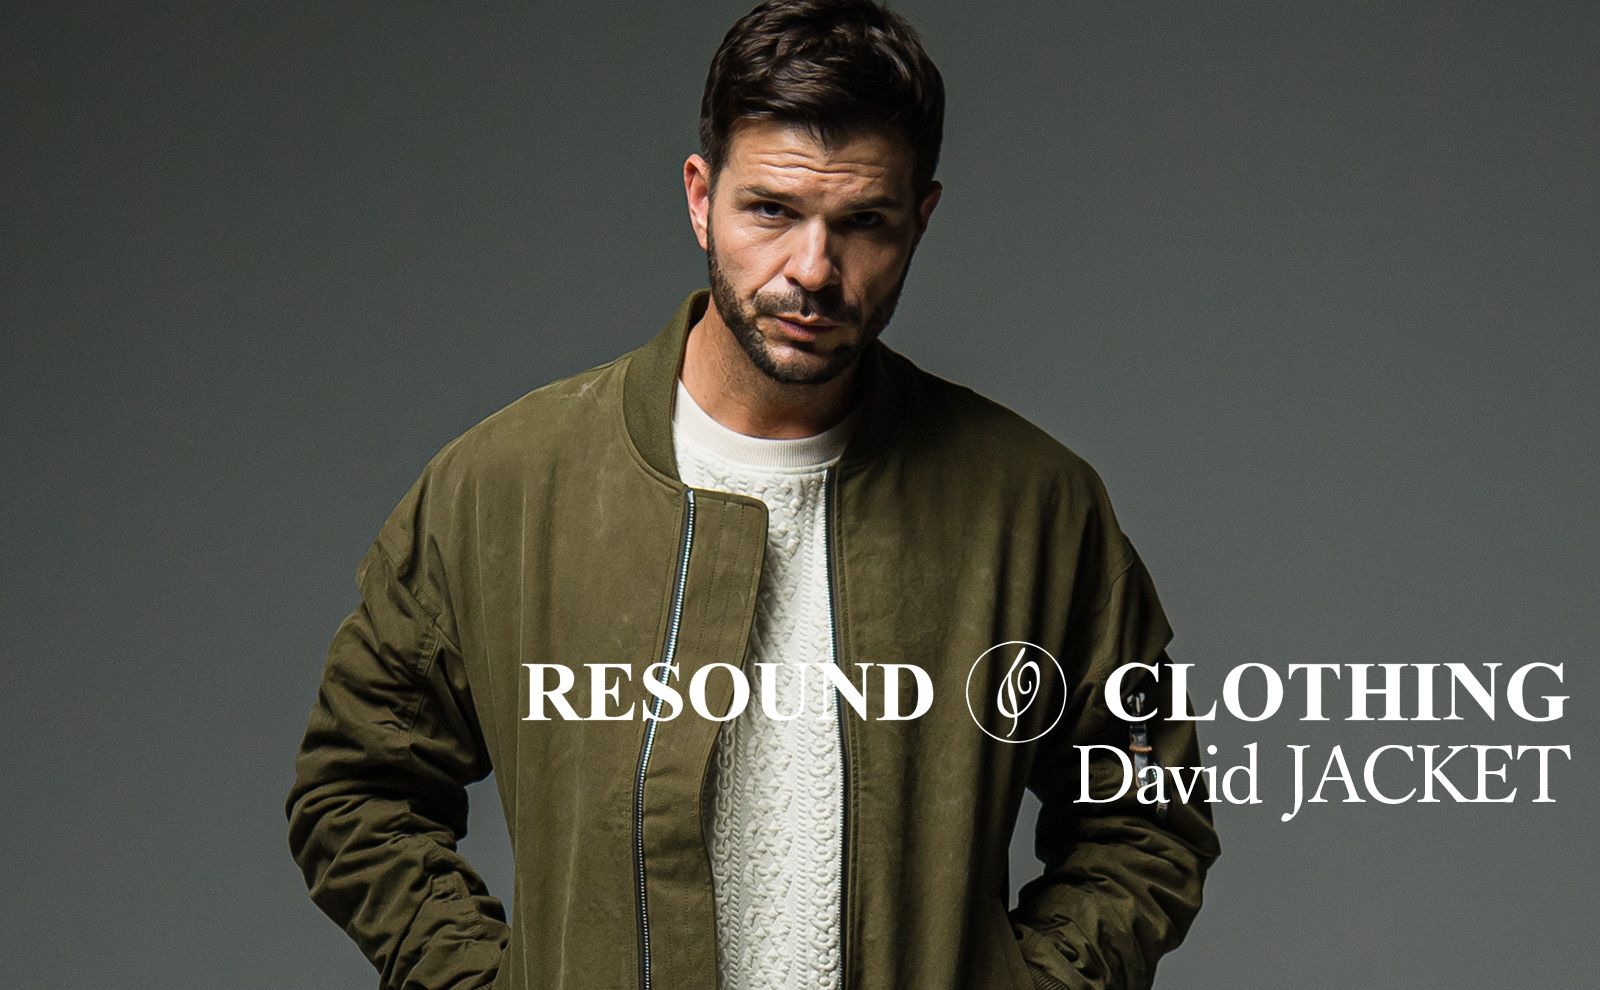 RESOUND CLOTHING - リサウンドクロージング | 正規通販 laid-back